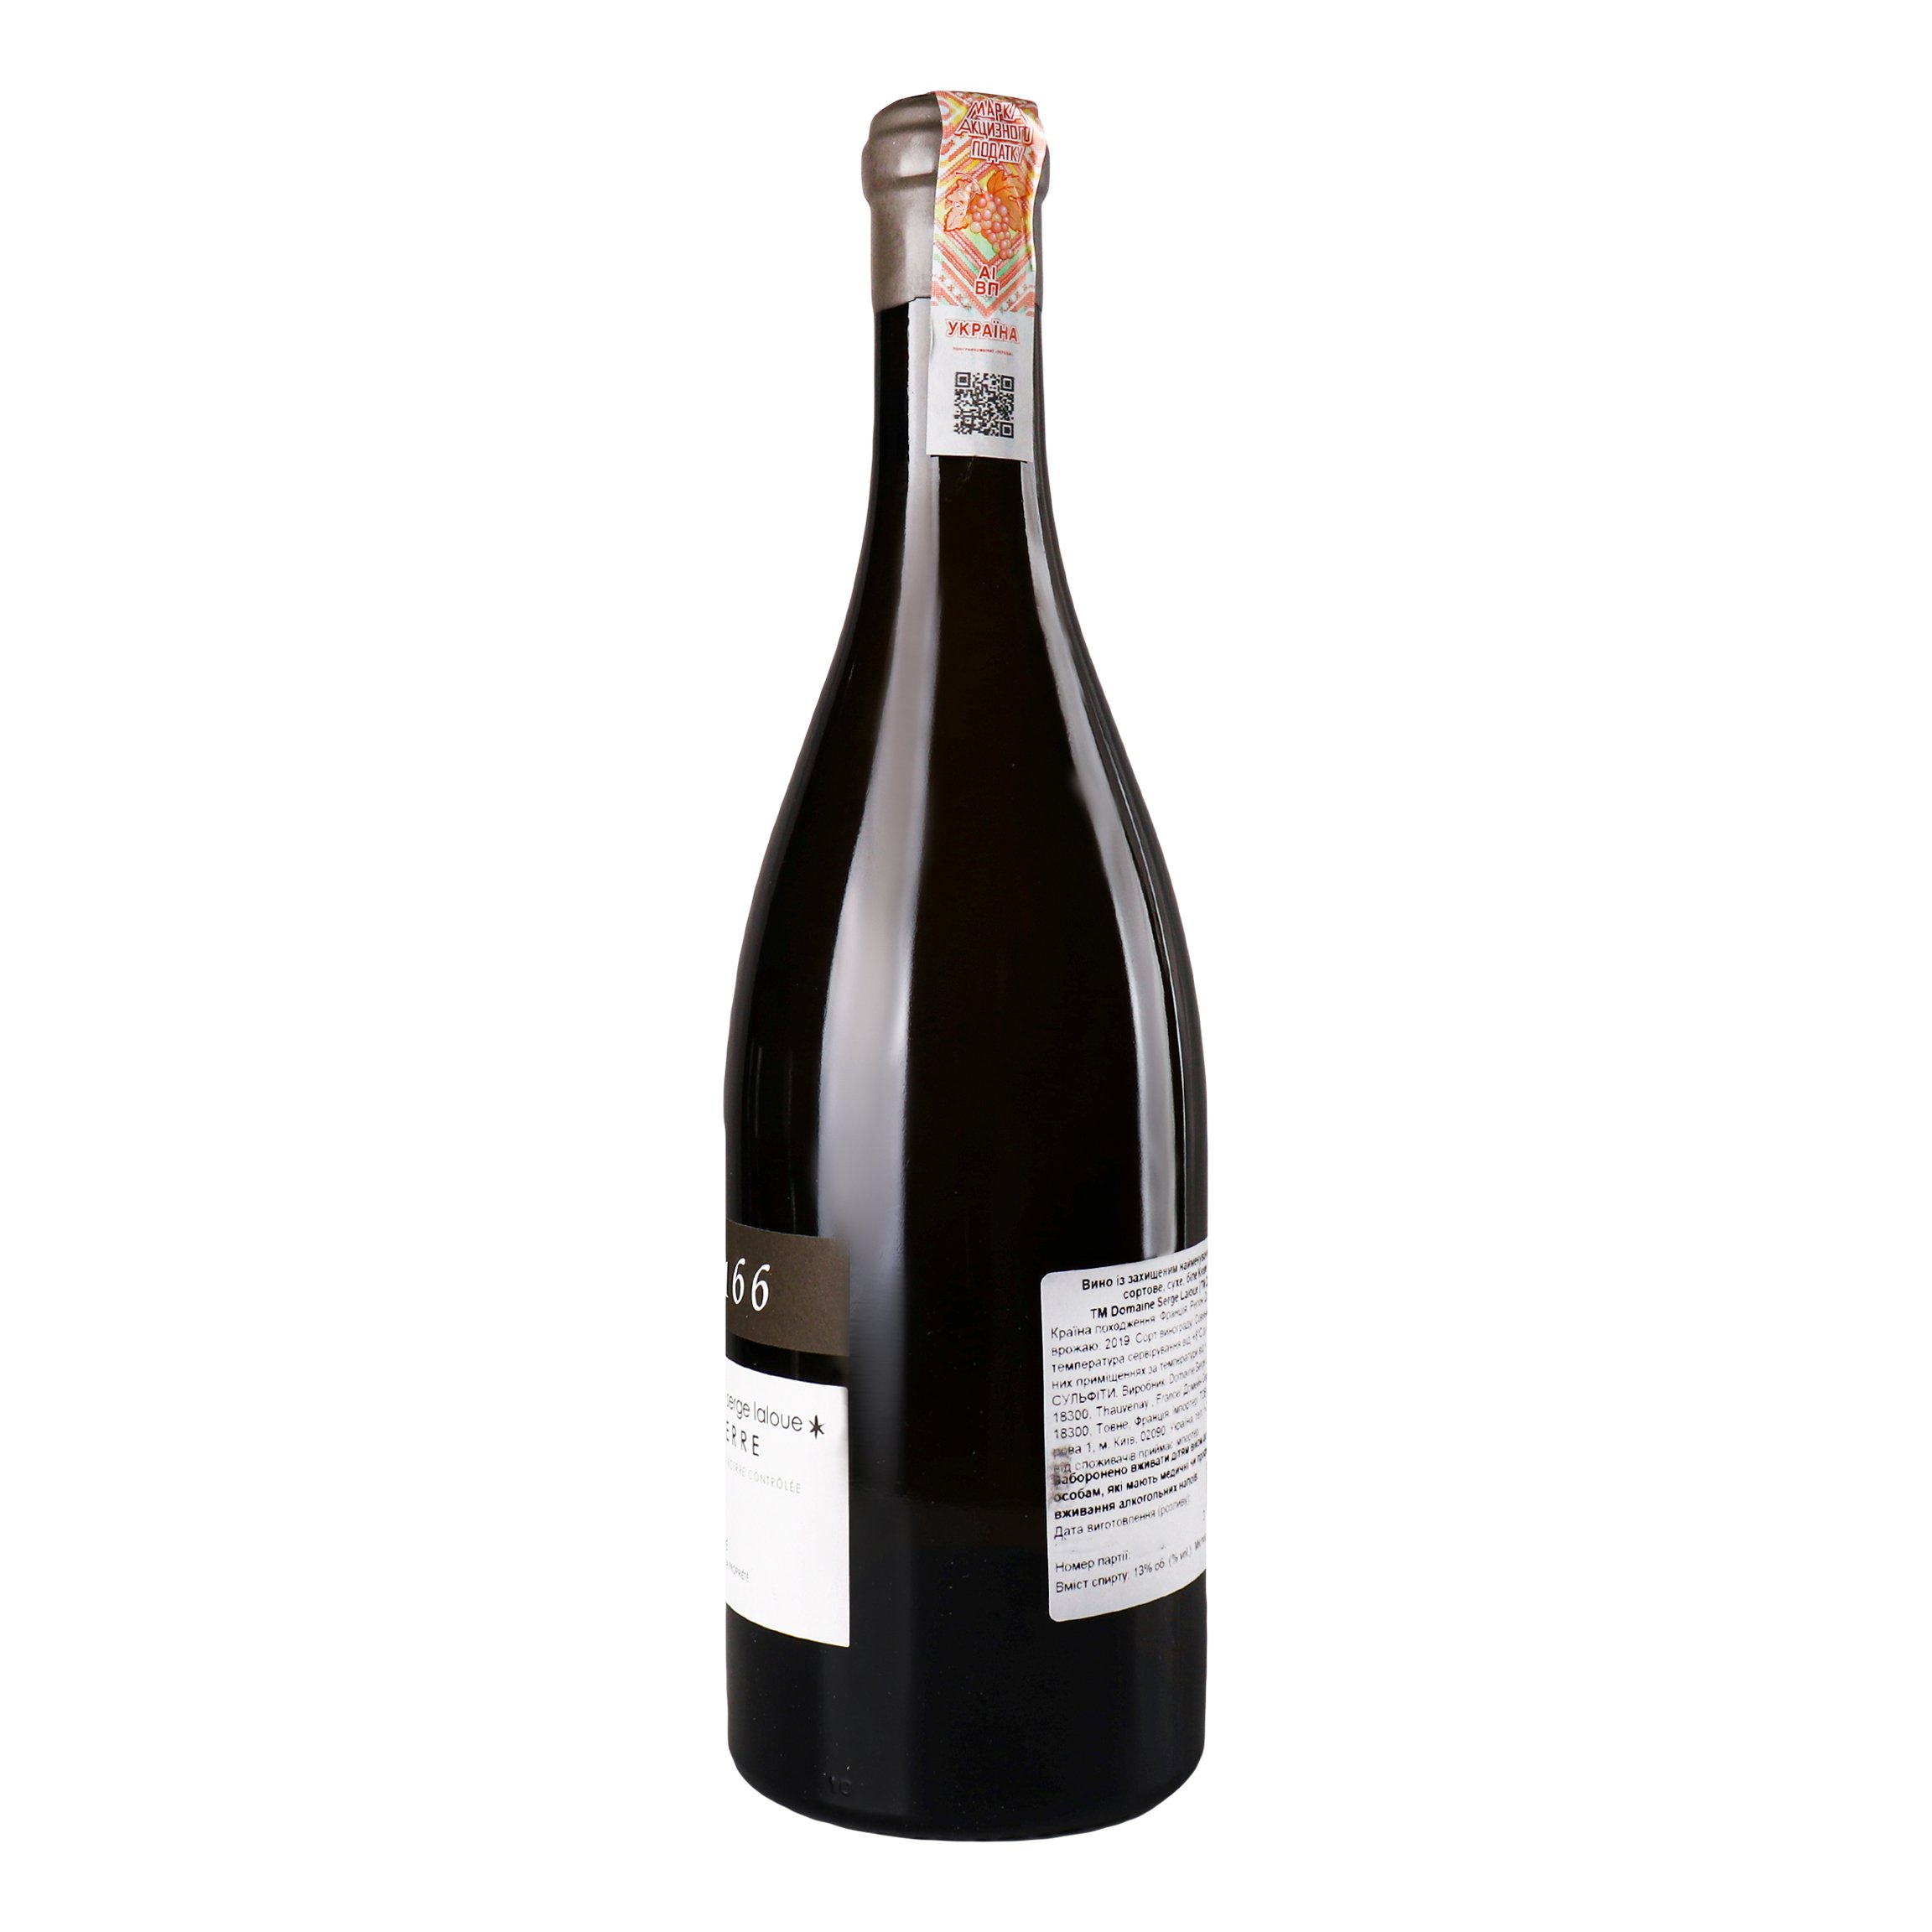 Вино Domaine Serge Laloue Sancerre Cuvee 1166, 2019 AOC, белое, сухое, 13%, 0,75 л (688967) - фото 3